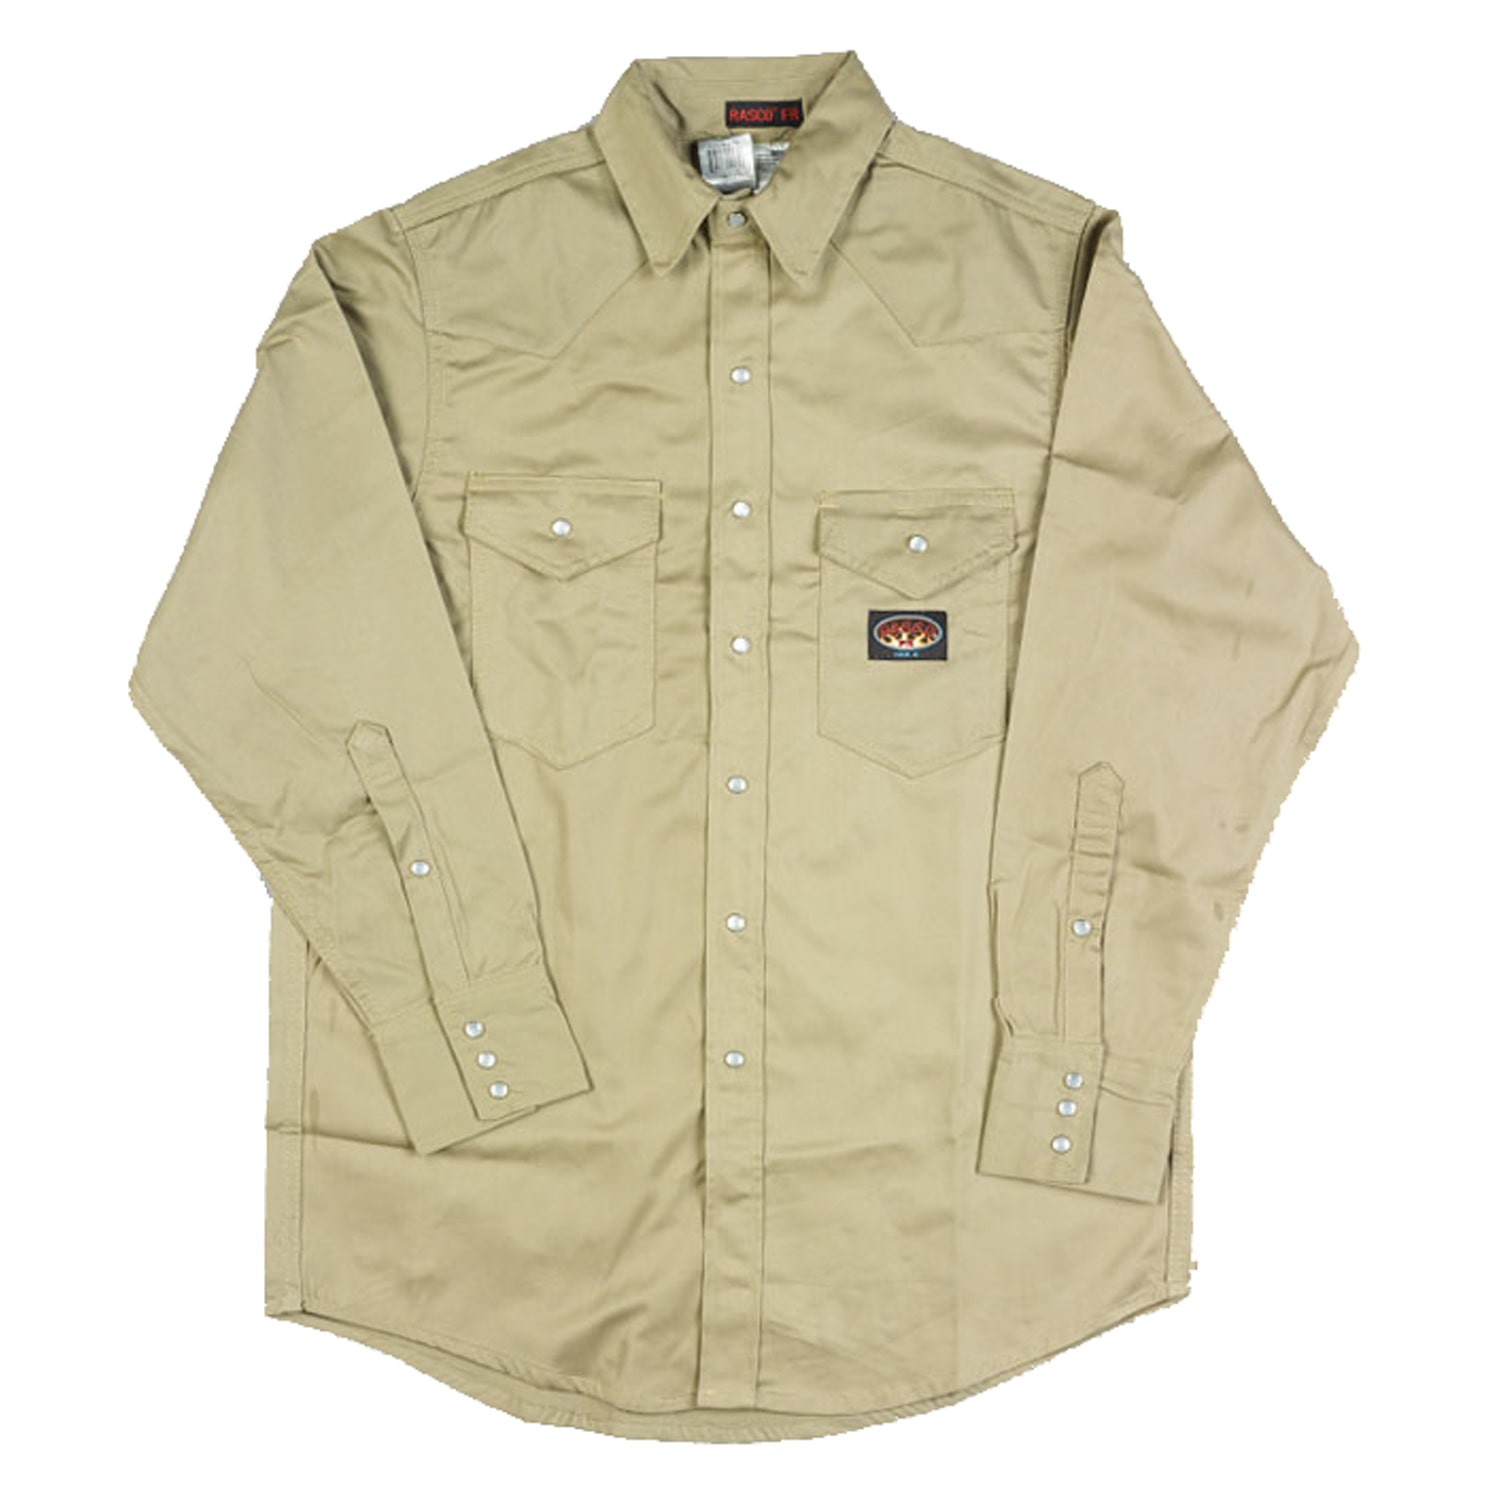 Rasco Flame Resistant Lightweight Work Shirt - Khaki